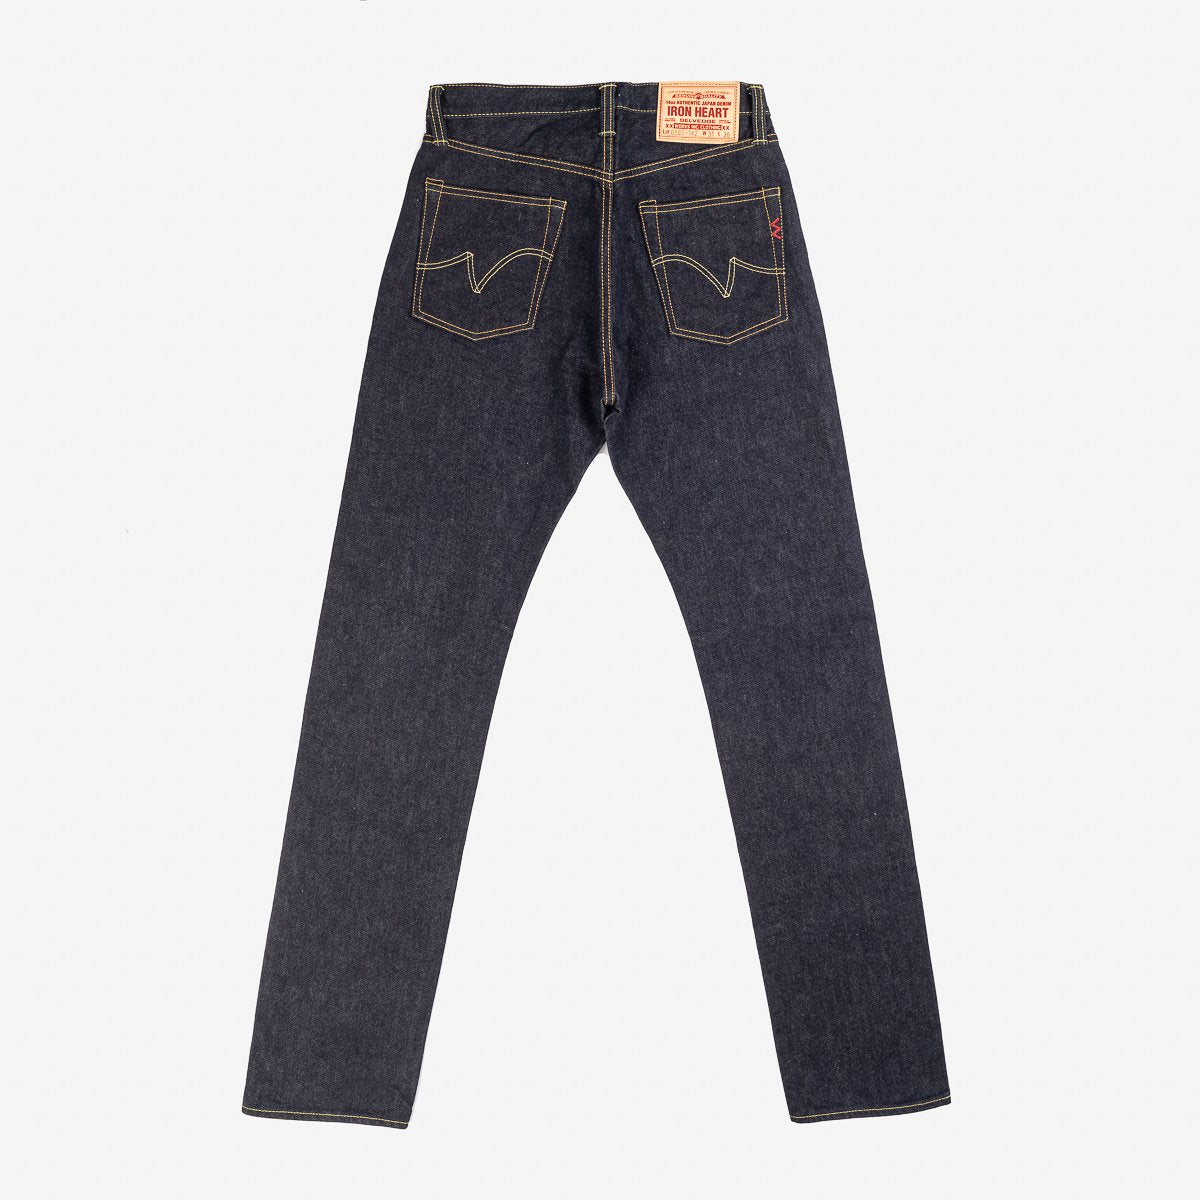 Iron Heart IH-888S-142 14oz Selvedge Denim Medium/High Rise Tapered Cut Jeans - Indigo